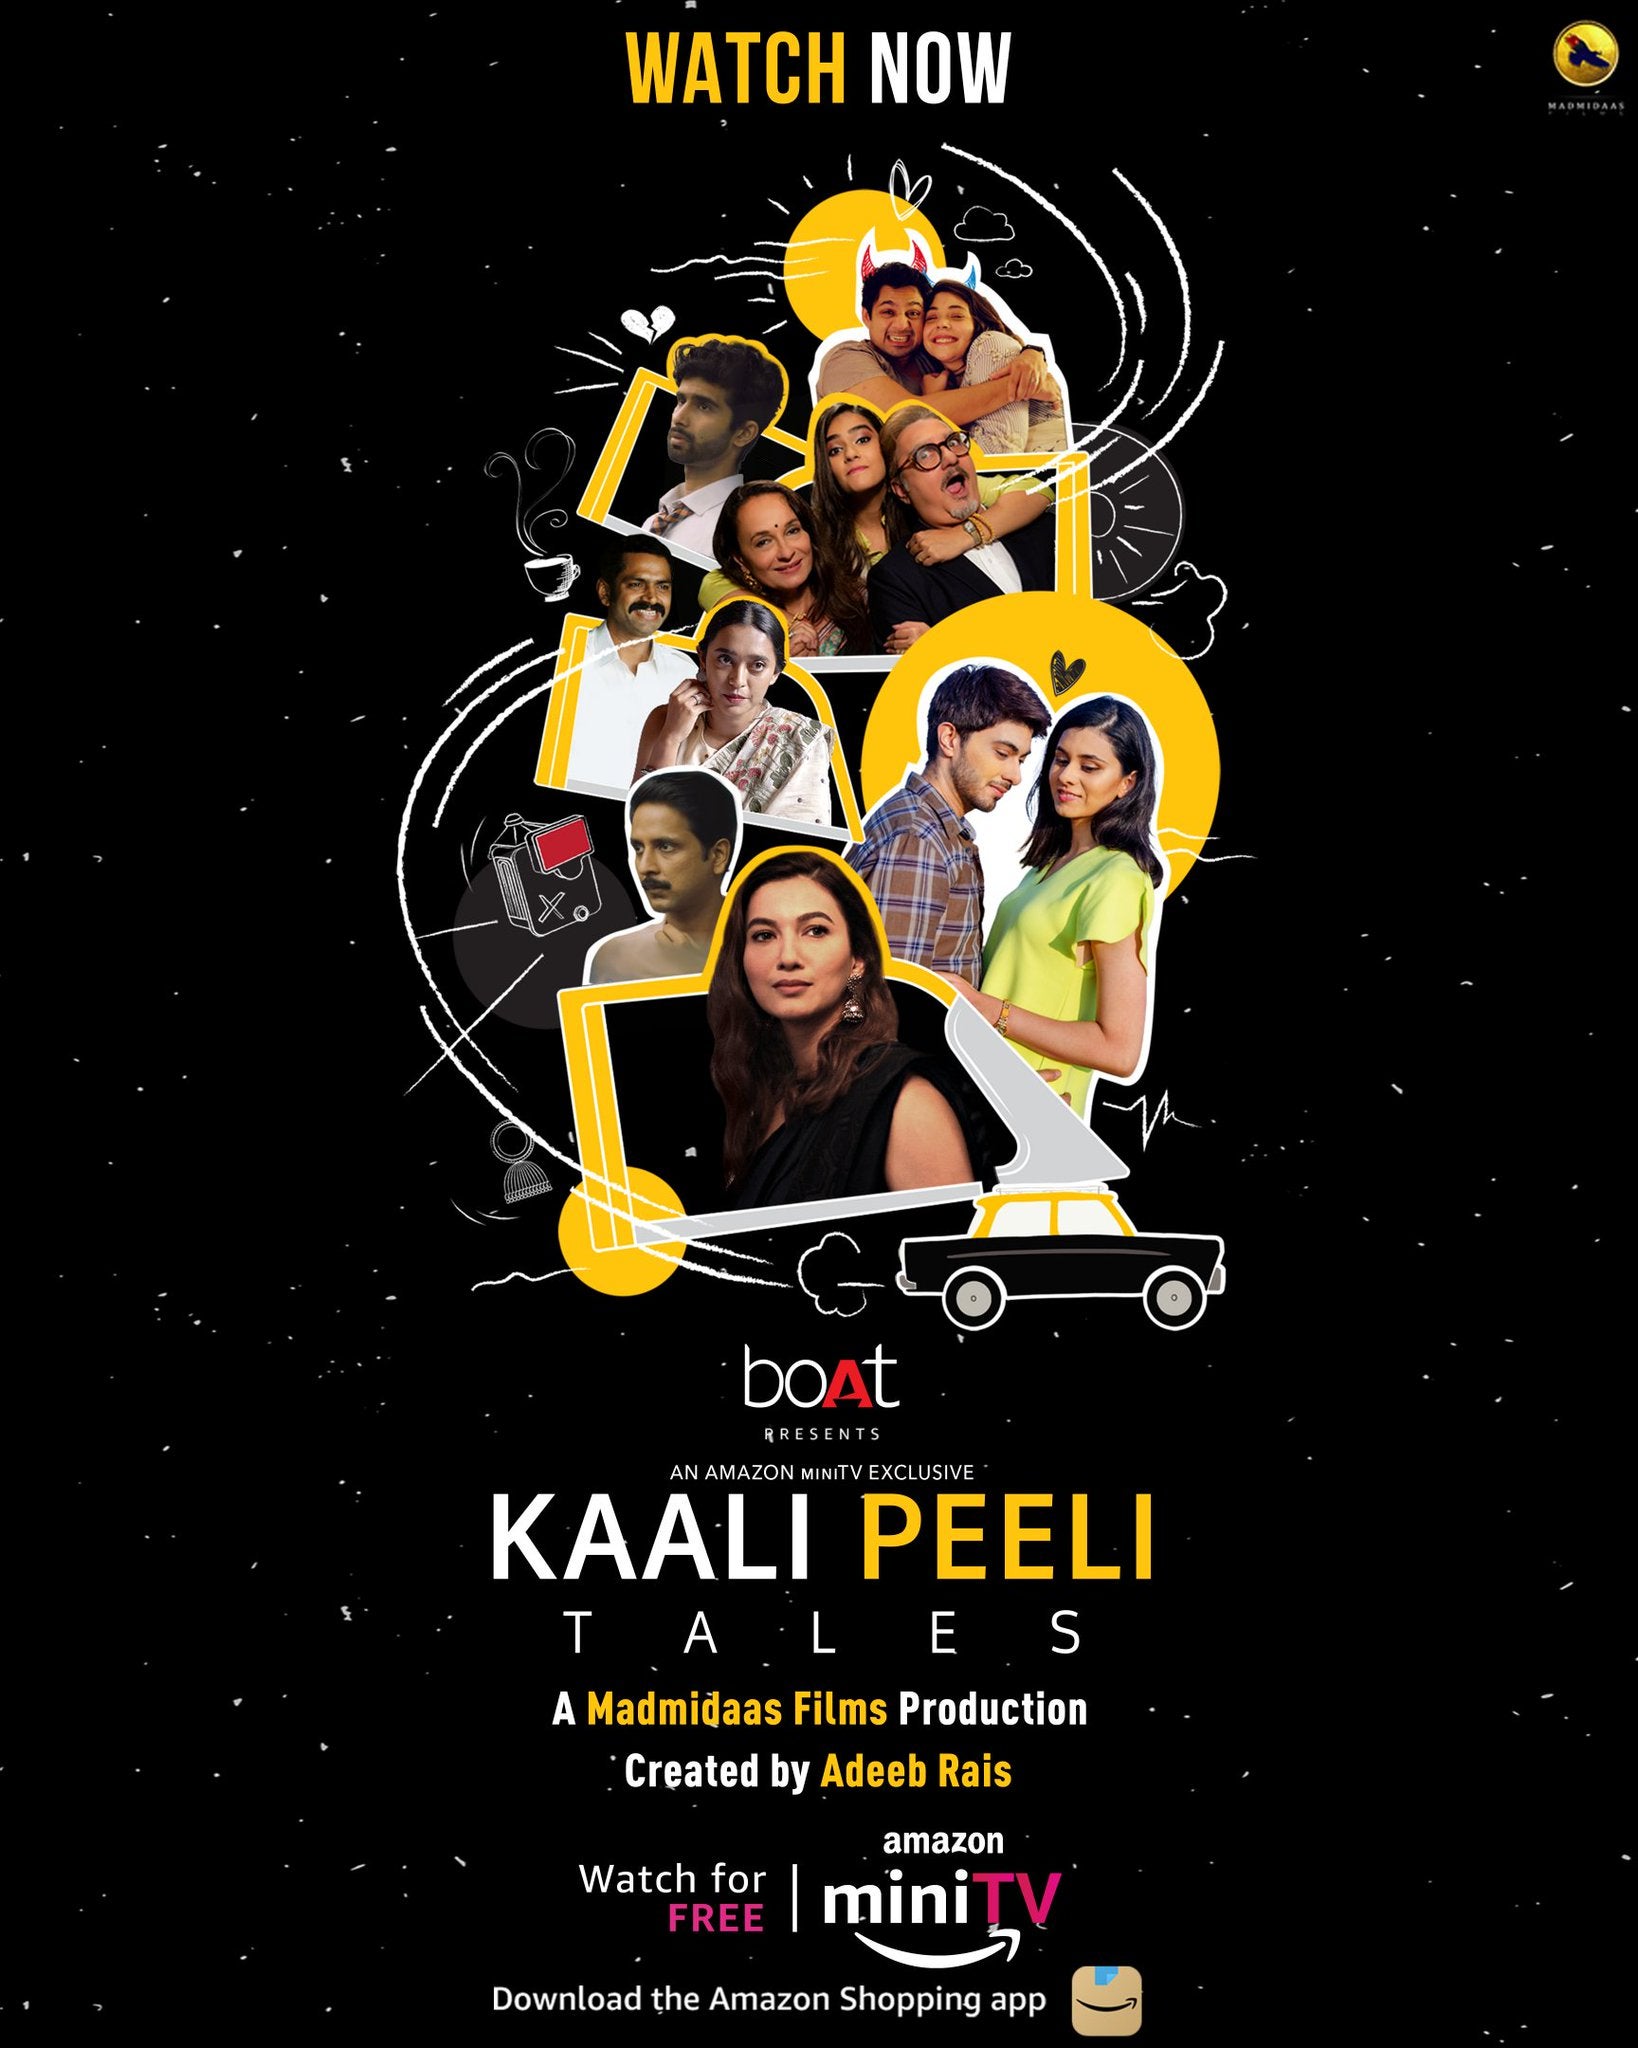 TV ratings for Kaali Peeli Tales in Portugal. Amazon mini TV TV series